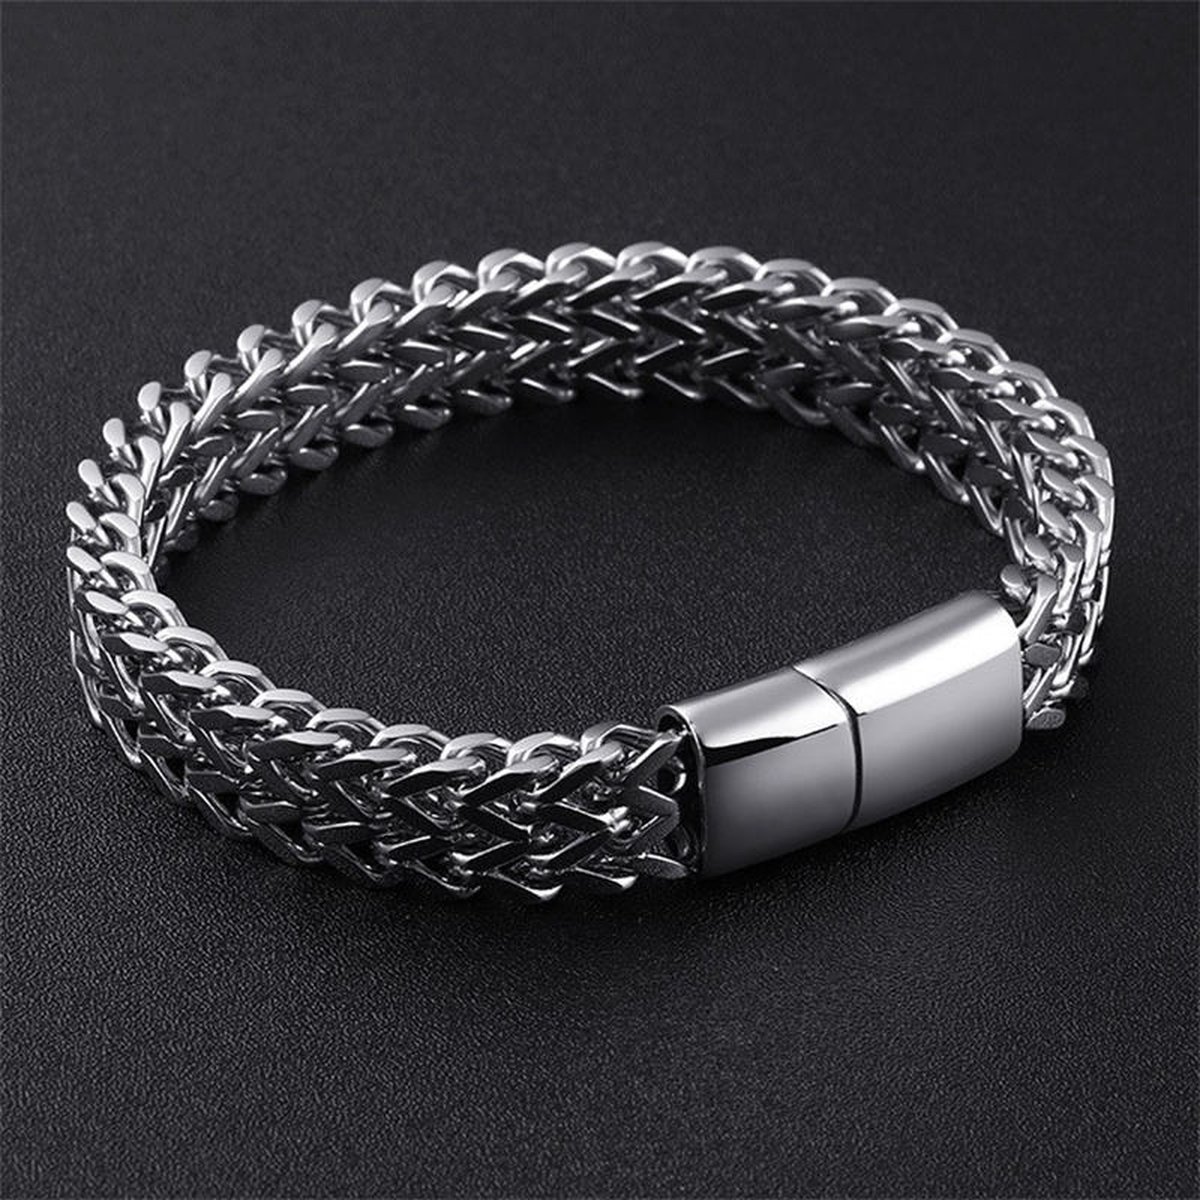 Donley - Armband voor mannen - Woven bracelet - Braided bracelet - cubaanse armband - heren sierraad - schakelarmband - schakelarmband heren - 19 cm - zilveren armband - ketting armband - chain - zilveren armband - armband zilver - silver wristband